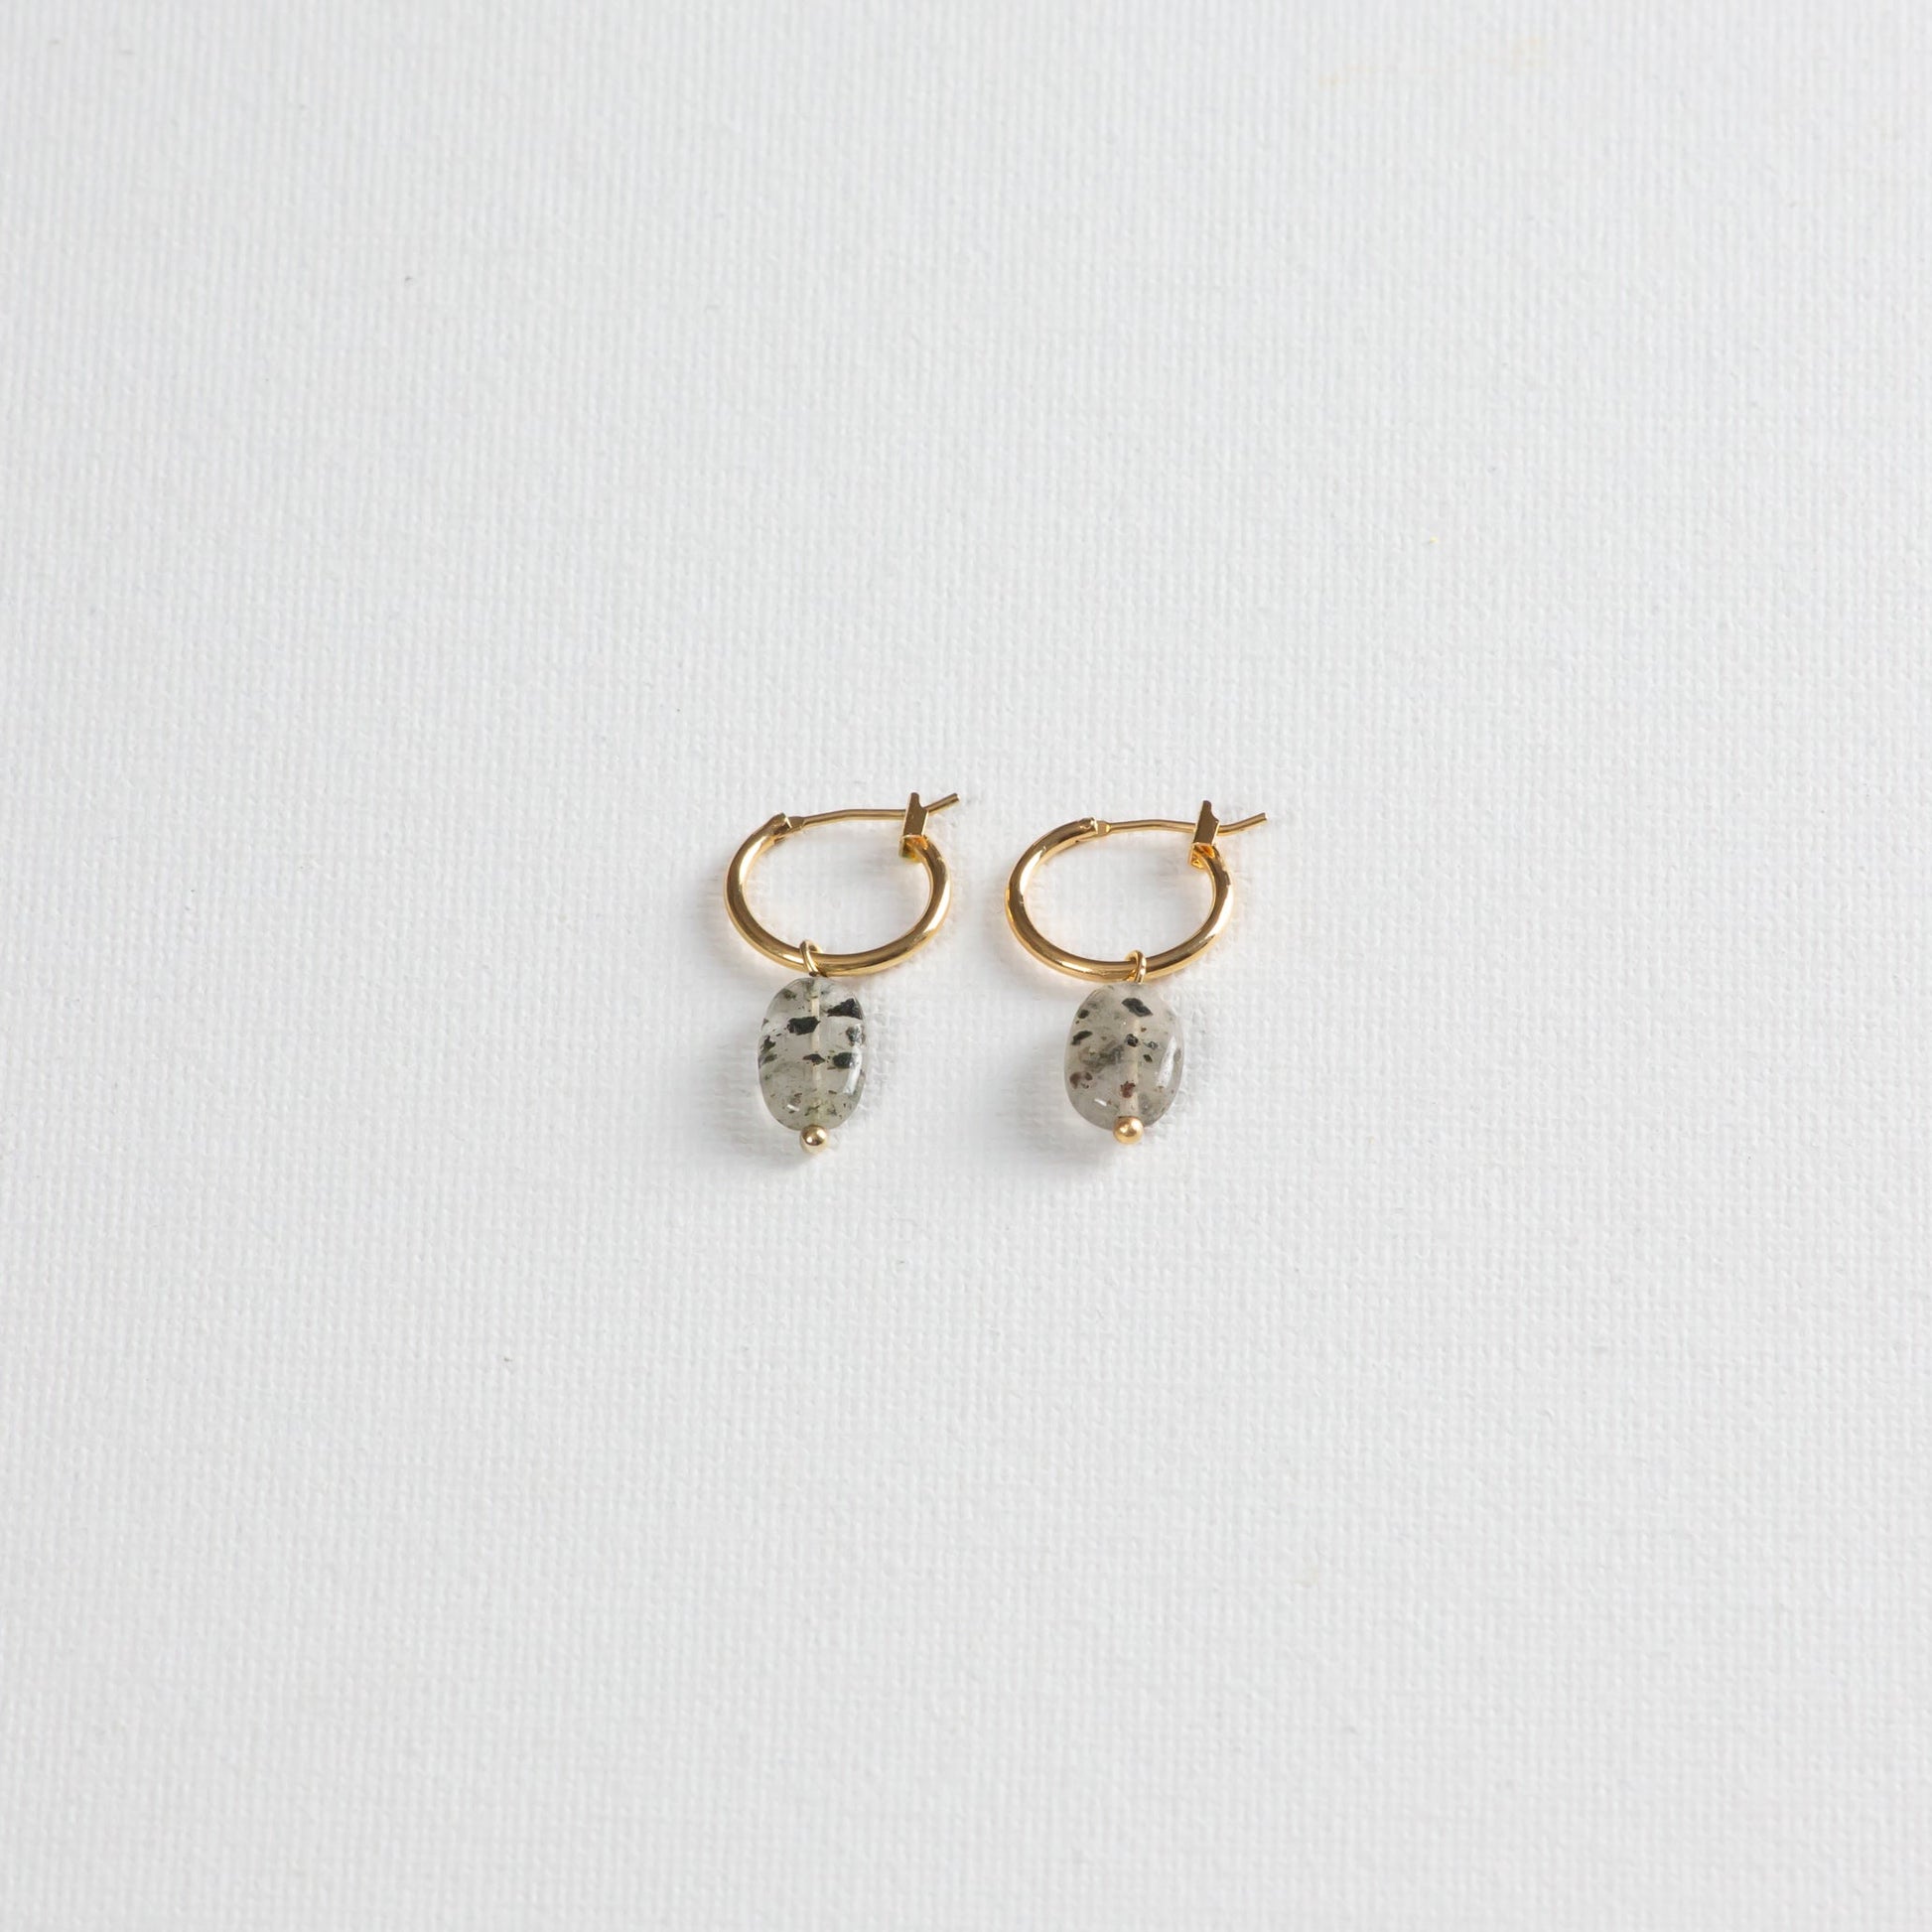 Gold hoop earrings with Dalmatian-like Black Rutilated Quartz Pendants, showcased on a clean white background. 